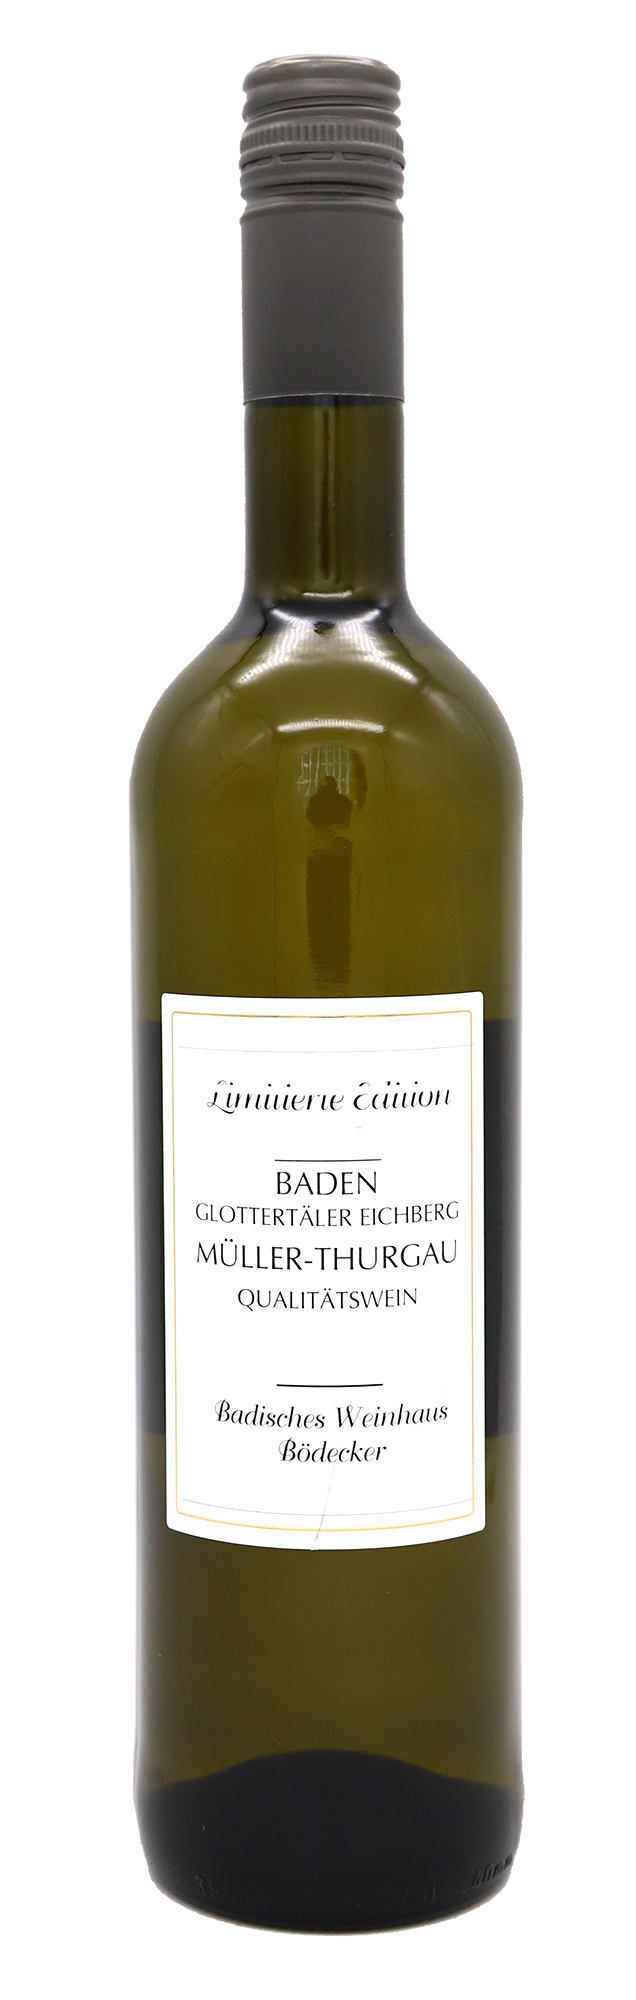 Glottertäler Eichberg    Limitierte Edition    Müller-Thurgau Qualitätswein - mild -